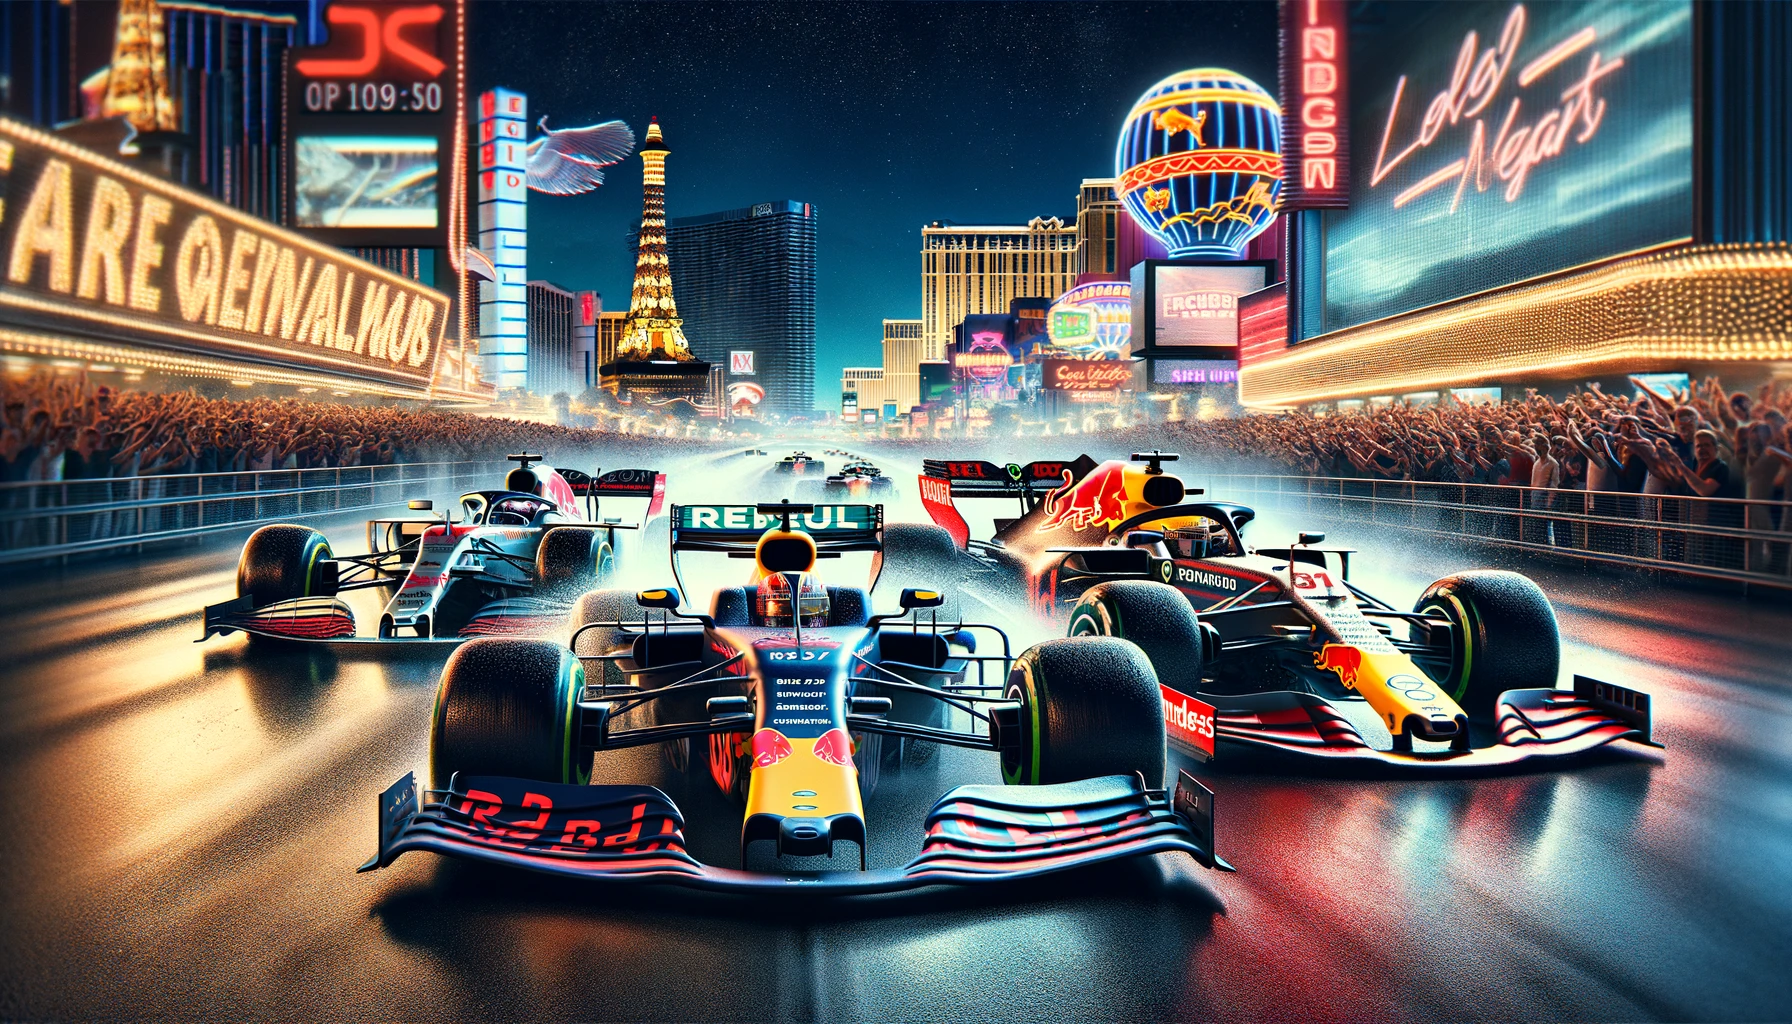 Formula 1 showdown with Red Bull, Ferrari, and Mercedes on the neon-lit Las Vegas Strip.